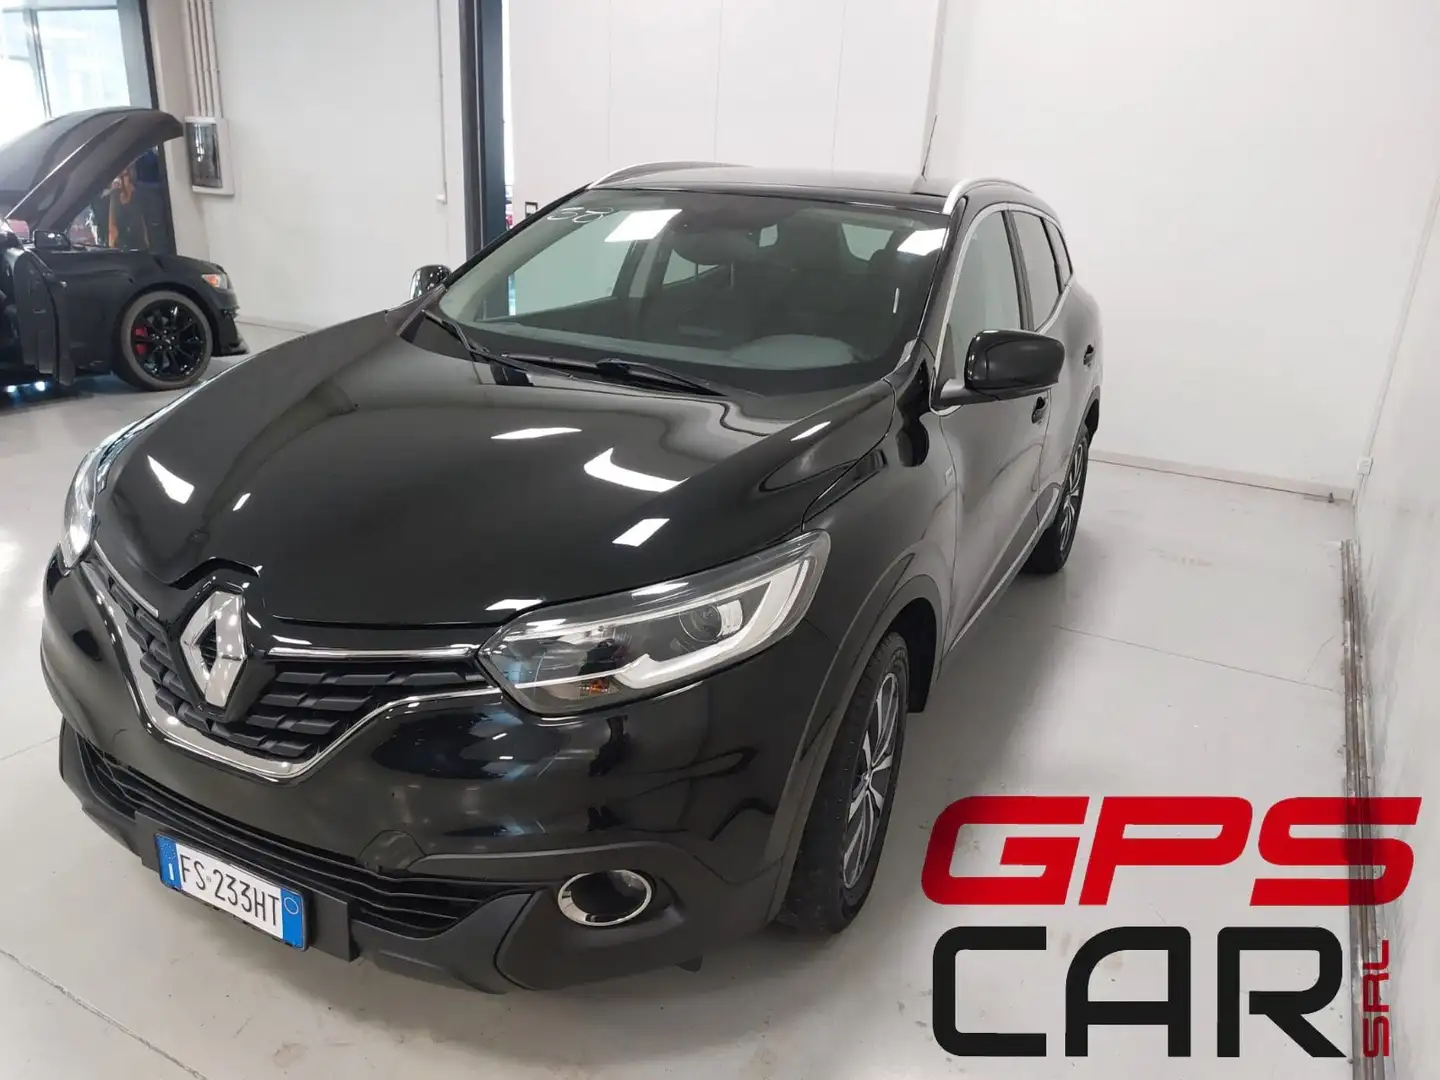 usato Renault Kadjar SUV/Fuoristrada/Pick-up a Calvenzano - Bergamo per €  14.885,-